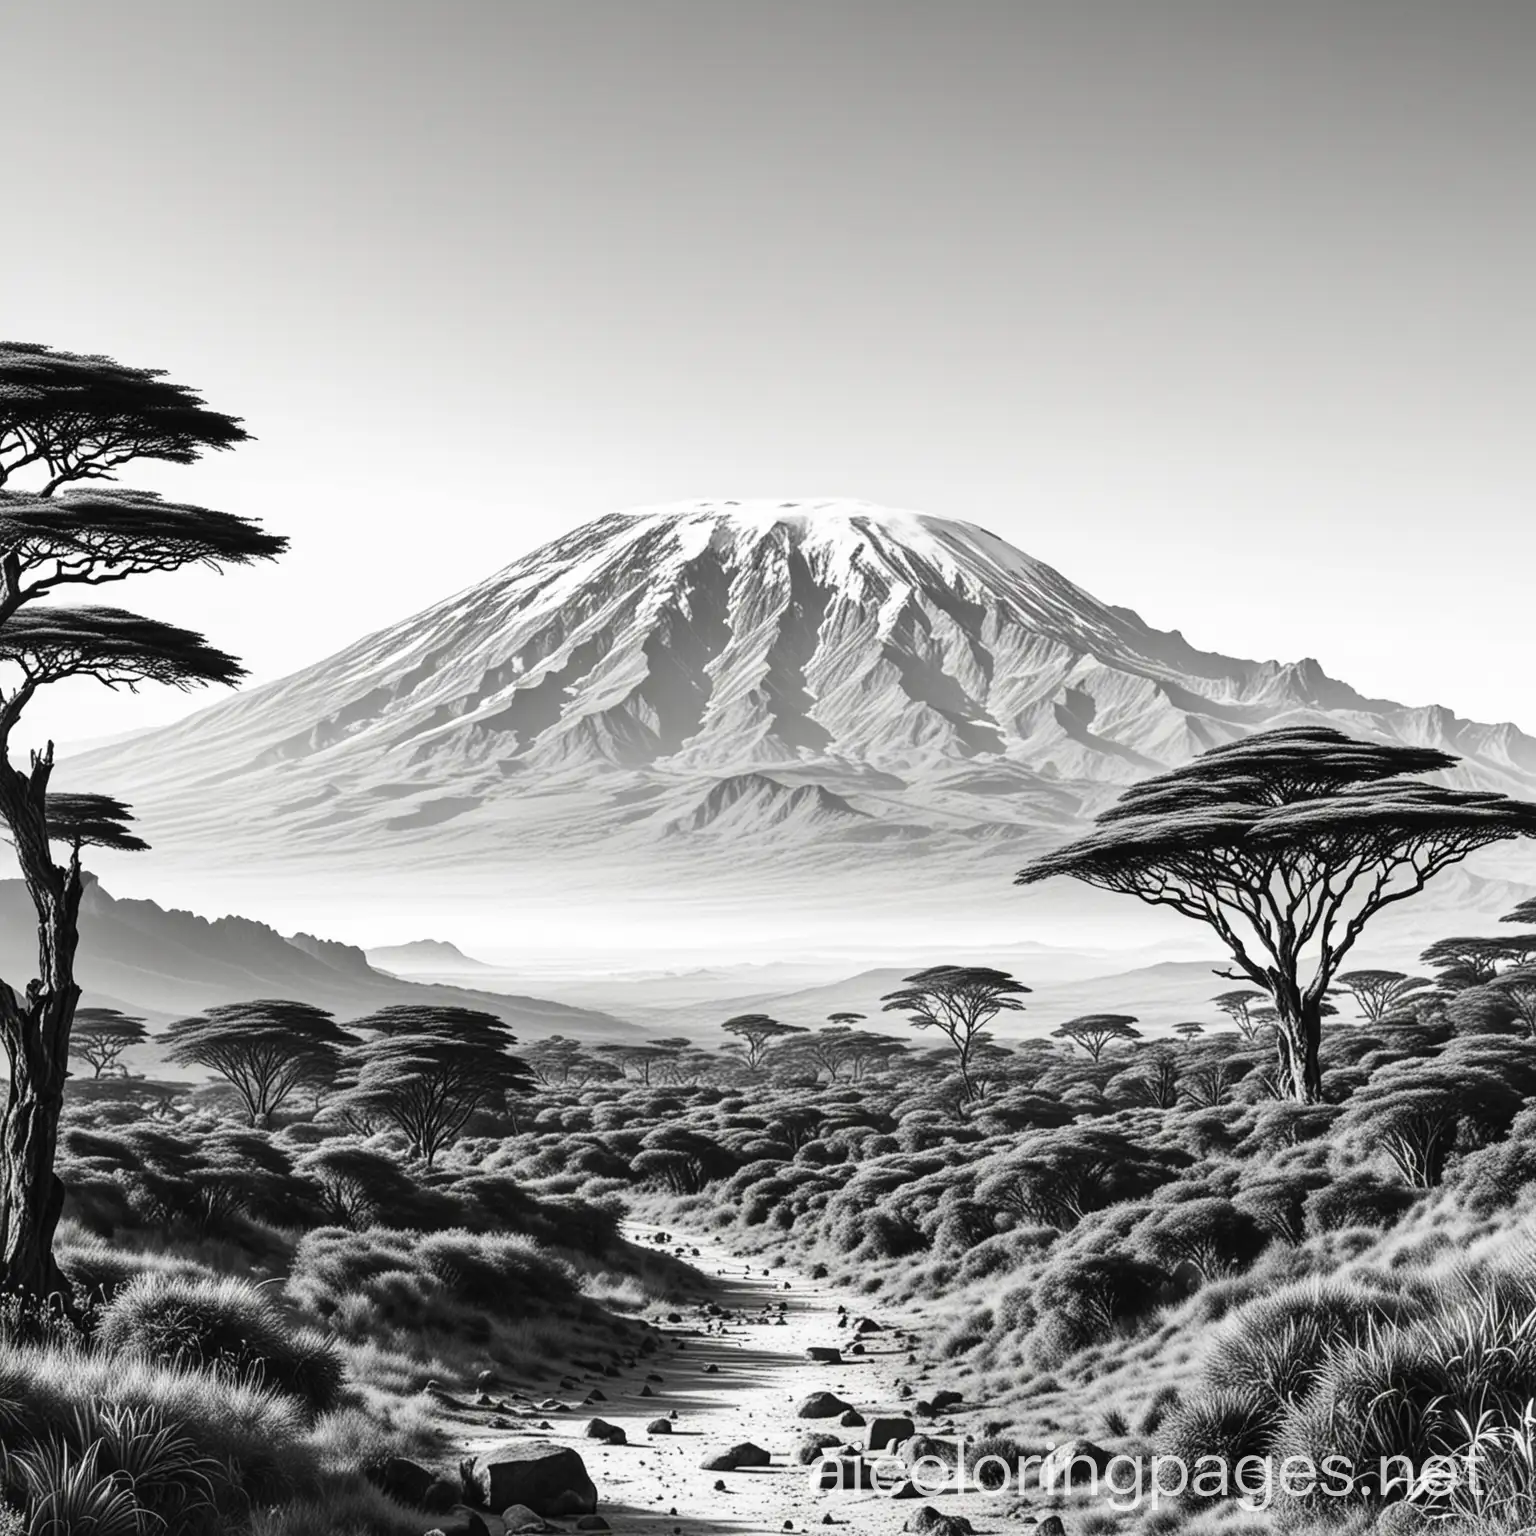 Mount-Kilimanjaro-Tanzania-Coloring-Page-Black-and-White-Line-Art